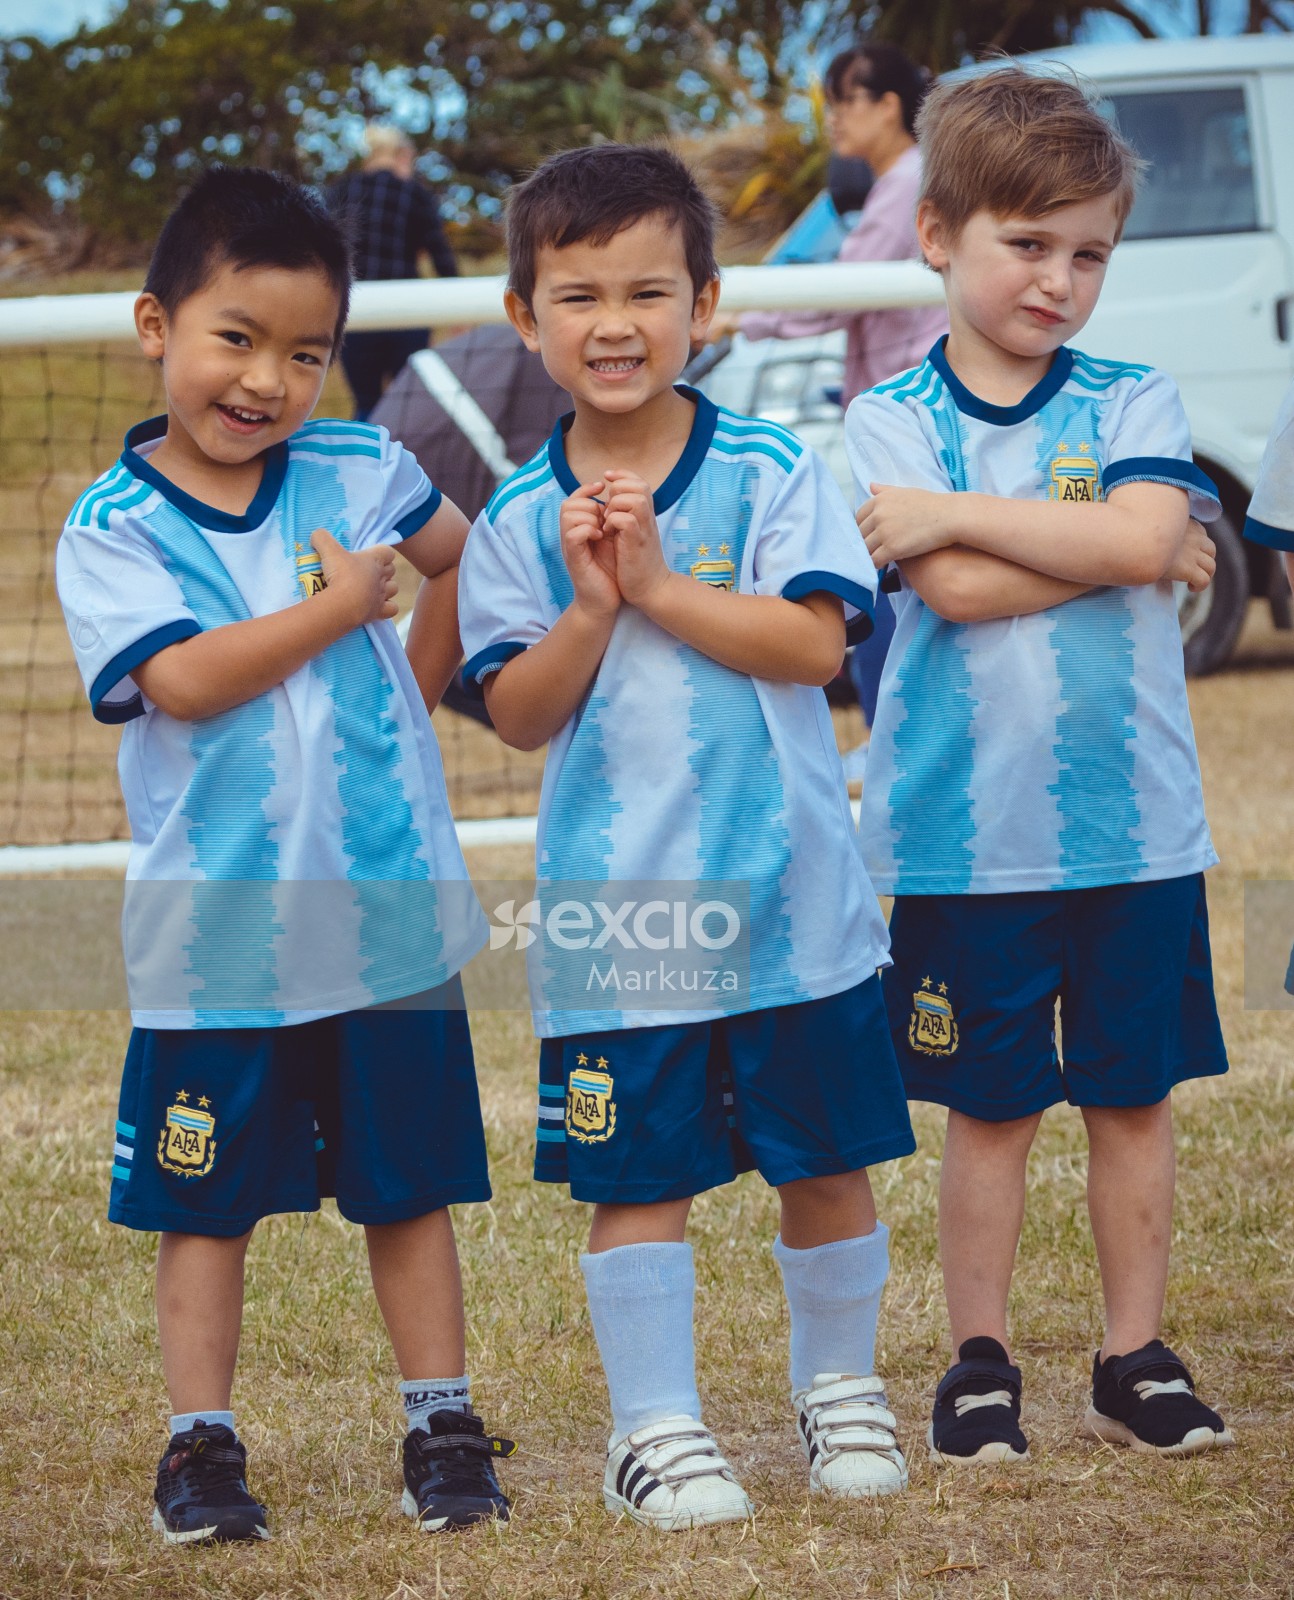 Three boys posing in Argentine kits - Little Dribblers